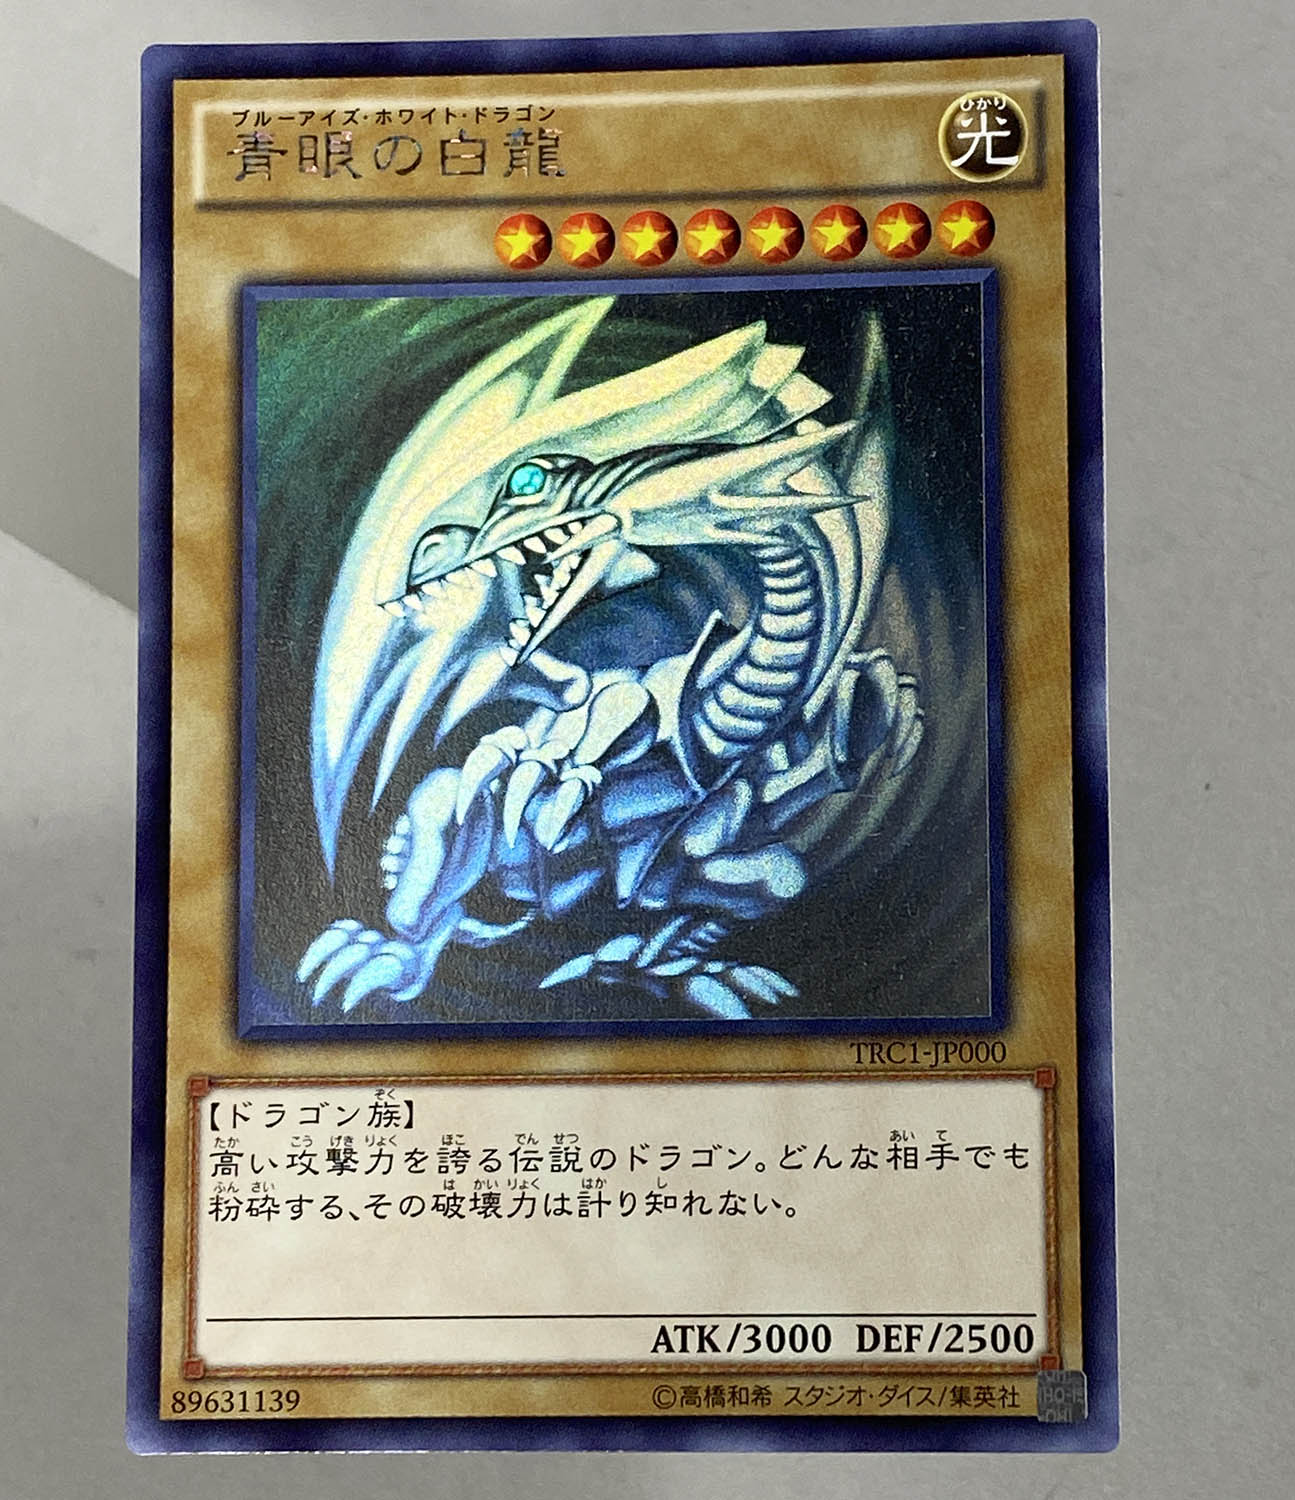 Yu-Gi-Oh! Blue-Eyes White Dragon Trc1-Jp000 Holo